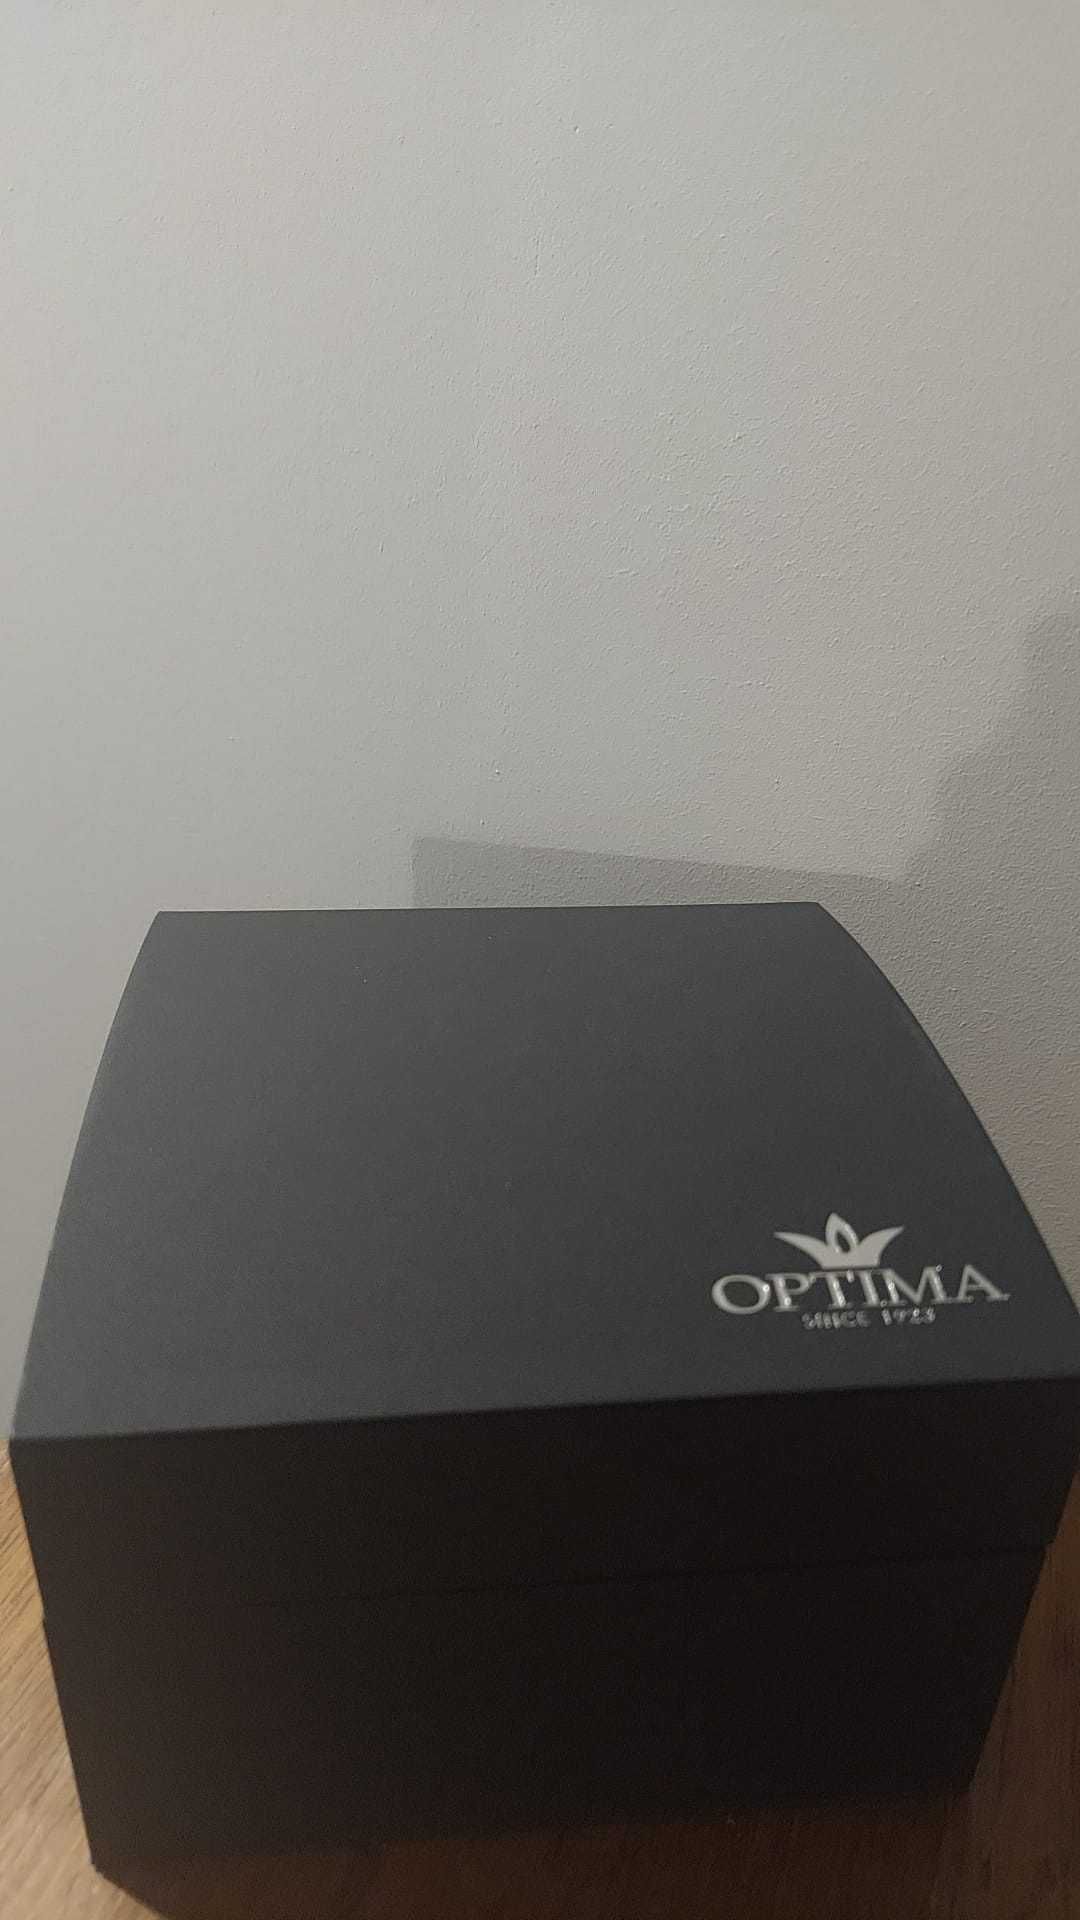 Optima Swiss made quartz watch